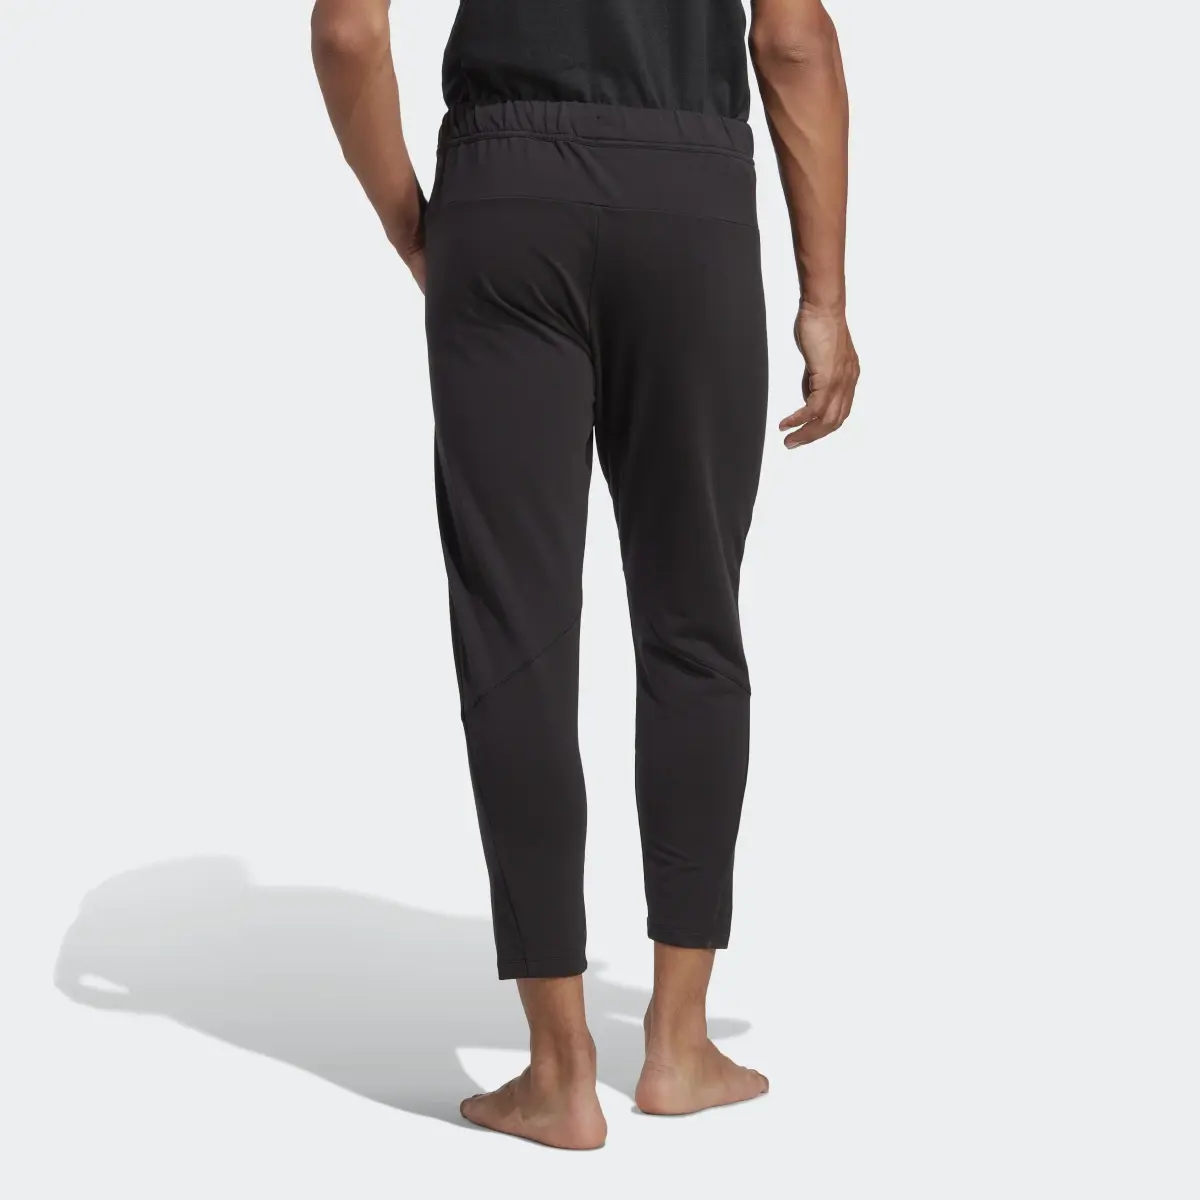 Adidas Pants de Yoga Designed for Training 7/8. 2